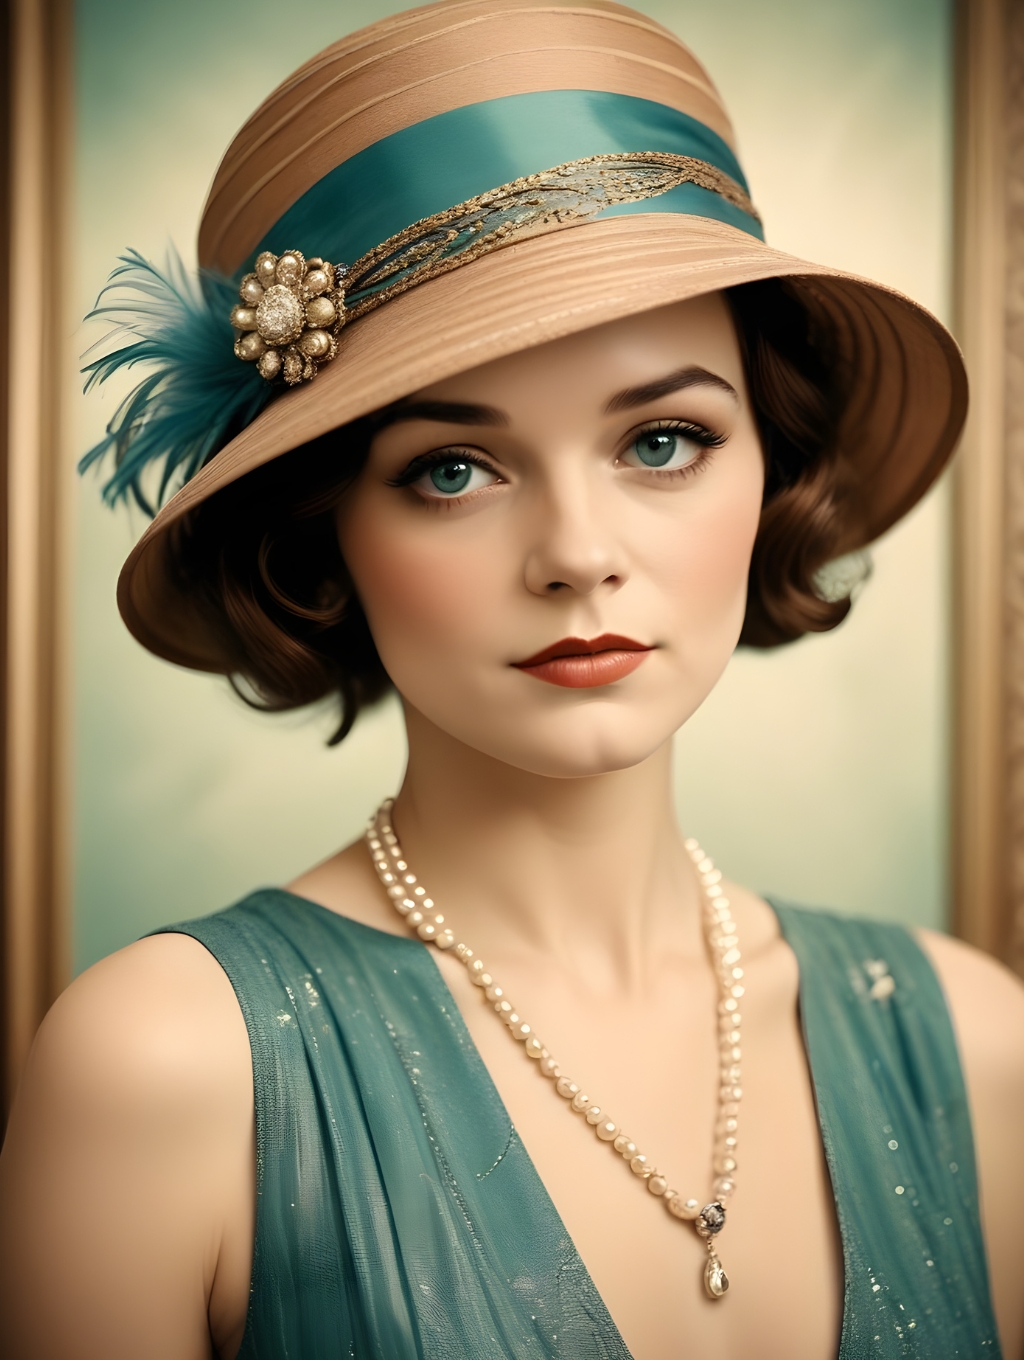 Gatsby Portraits Women: Image Frames & Self-Portraits-Theme:1